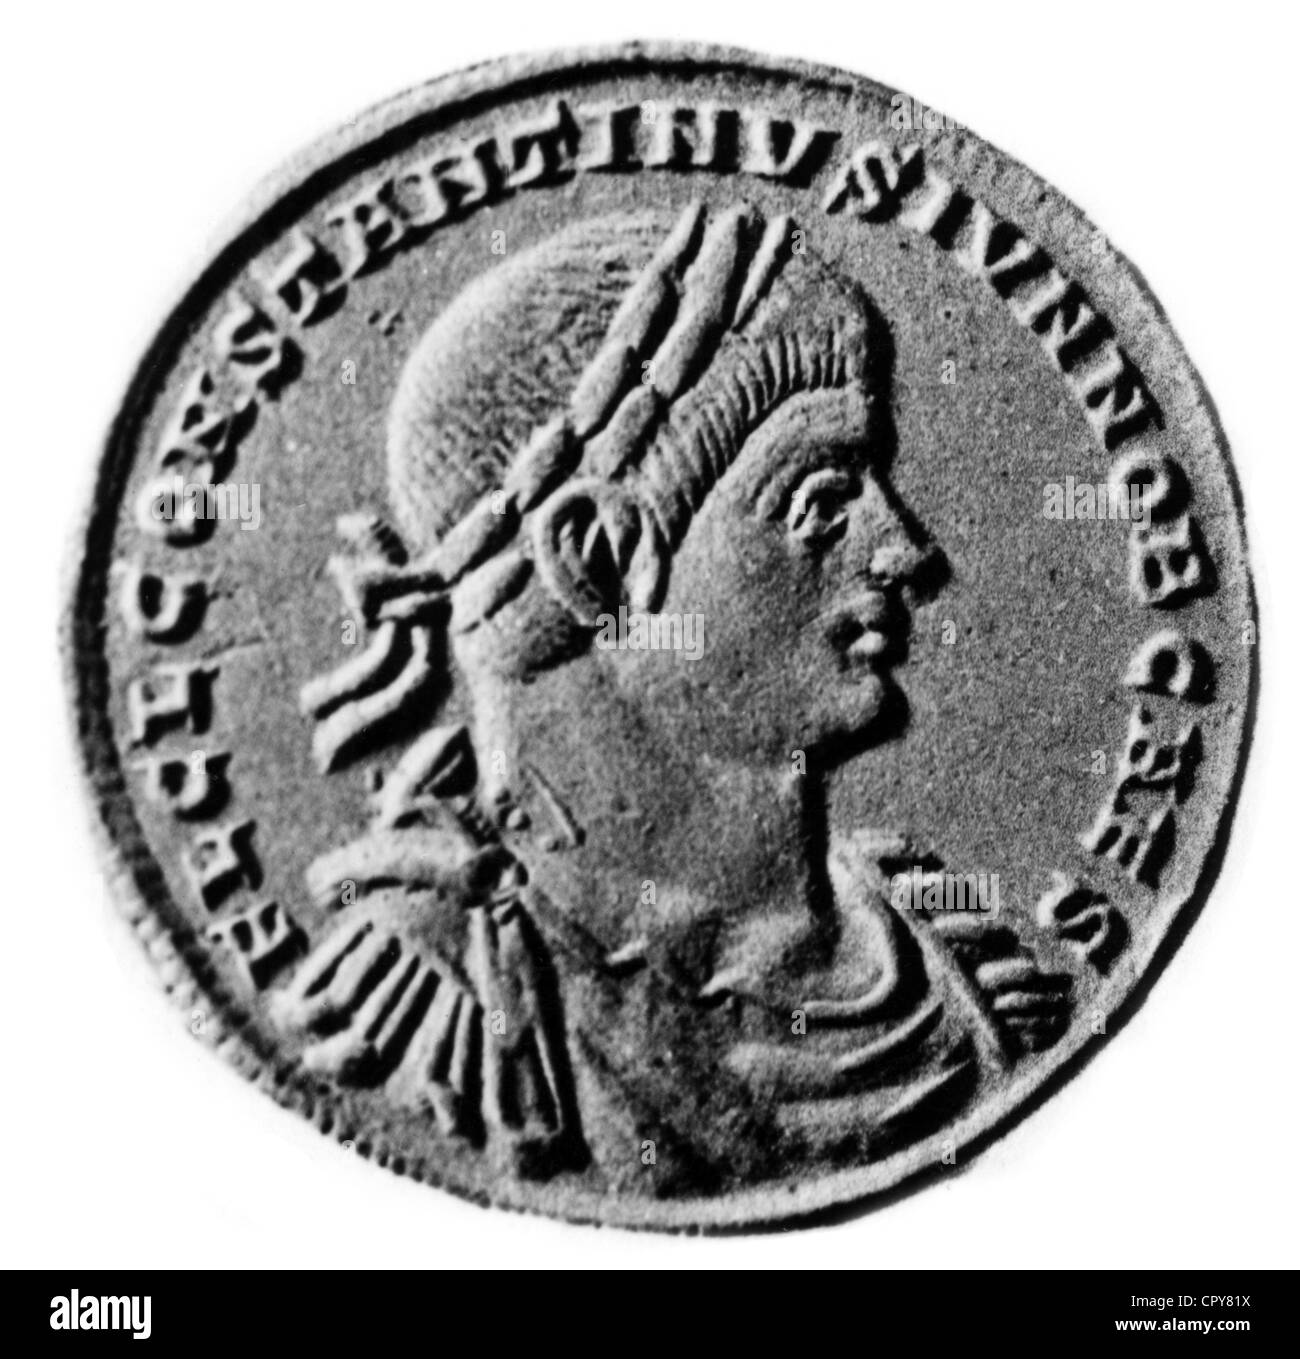 Konstantin II (Flavius Claudius Constantinus), 317-340, römische Kaiser 337-340, Porträt, Münze, ca. 335, Konstantinischen dyn Stockfoto